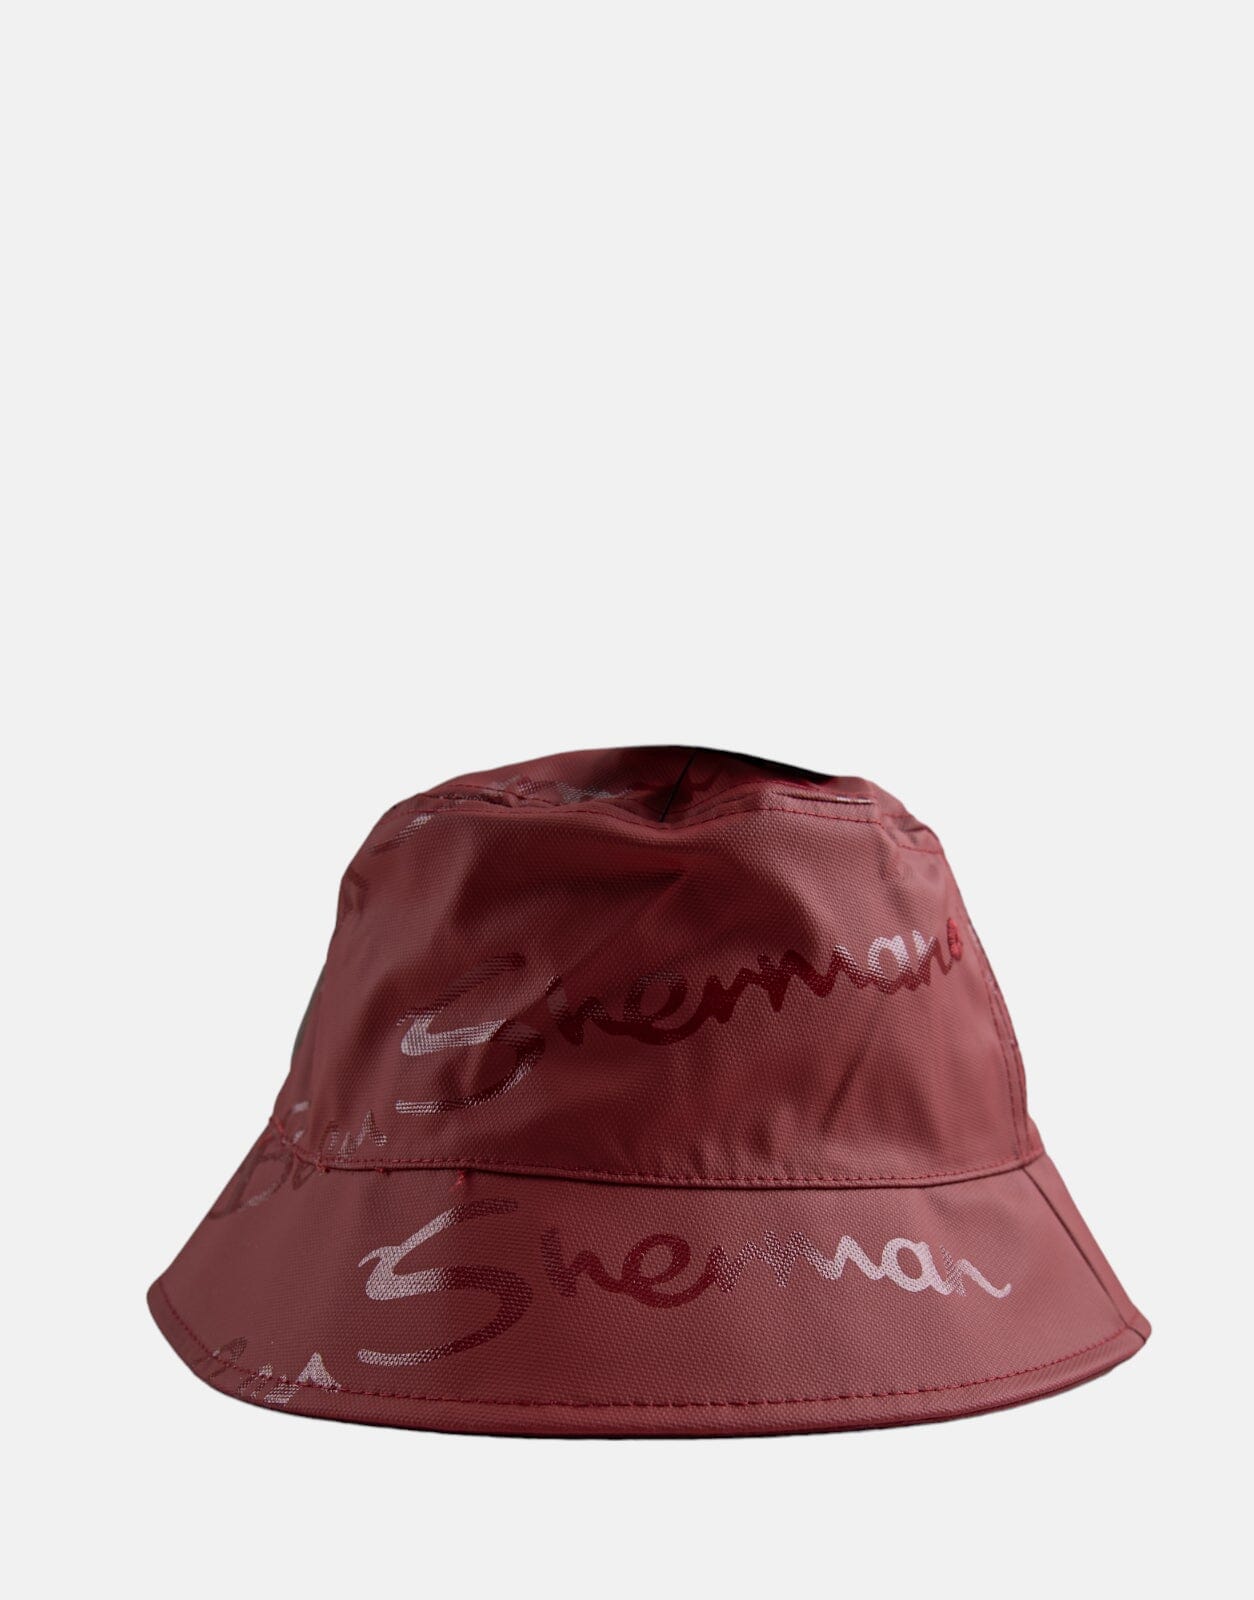 Ben Sherman Wax Target Bucket Hat Berry - Subwear